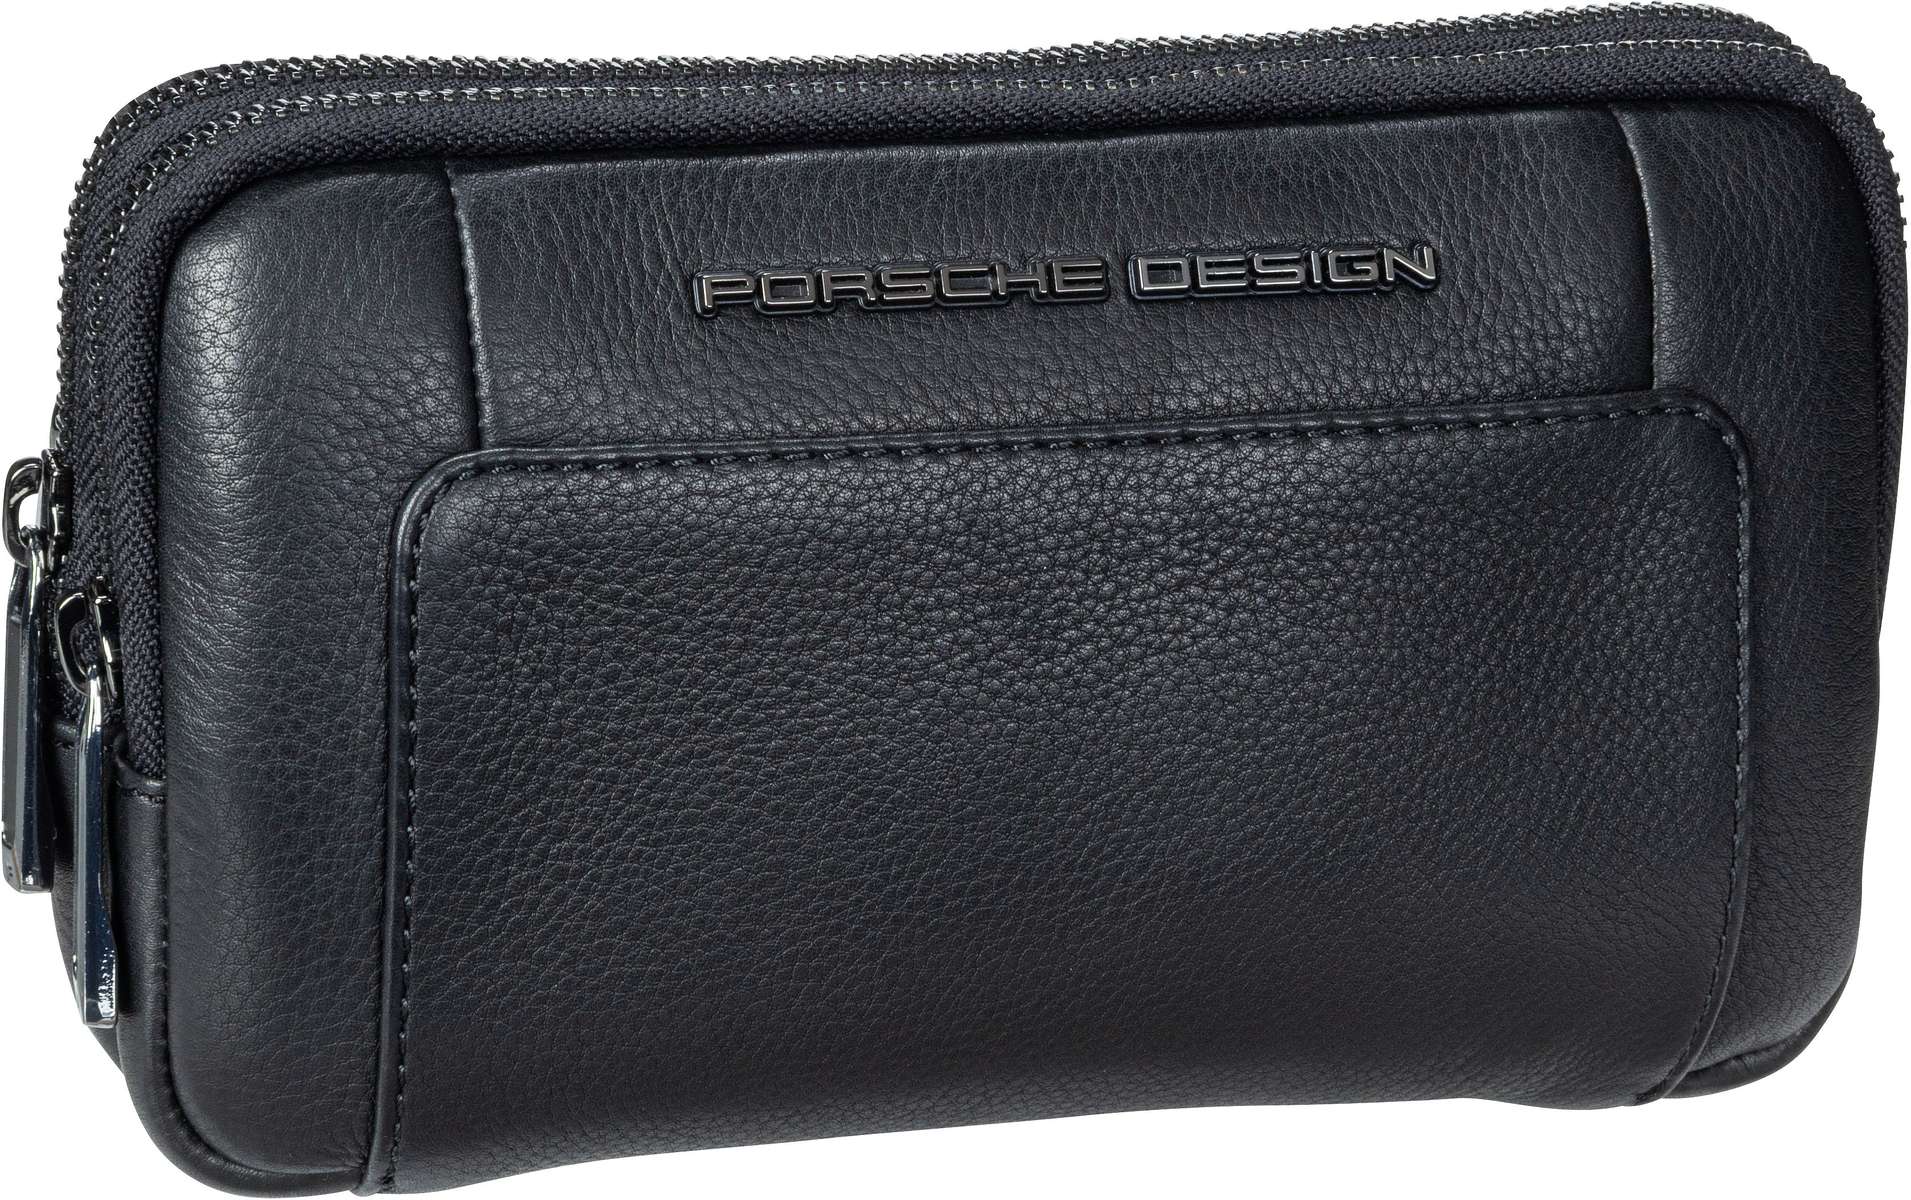 Porsche Design Roadster Leather Travel Pouch  in Black (0.9 Liter), Sling Bag